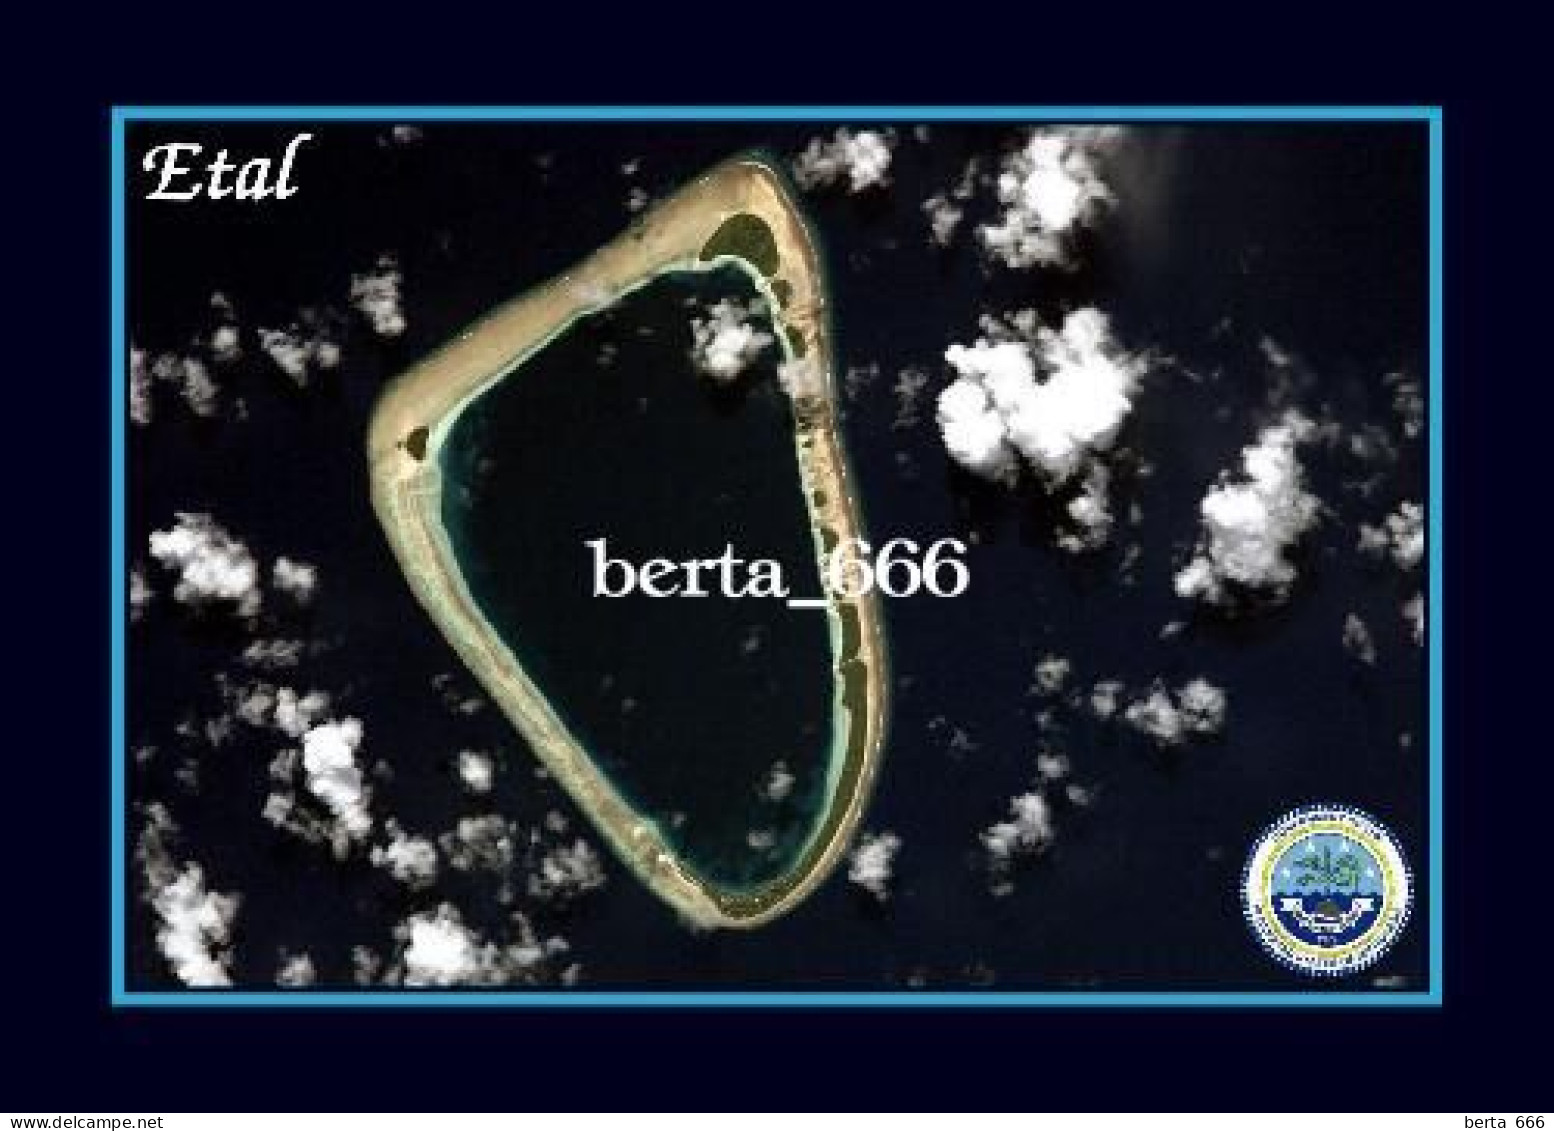 Micronesia Caroline Islands Etal Atoll New Postcard - Micronesia